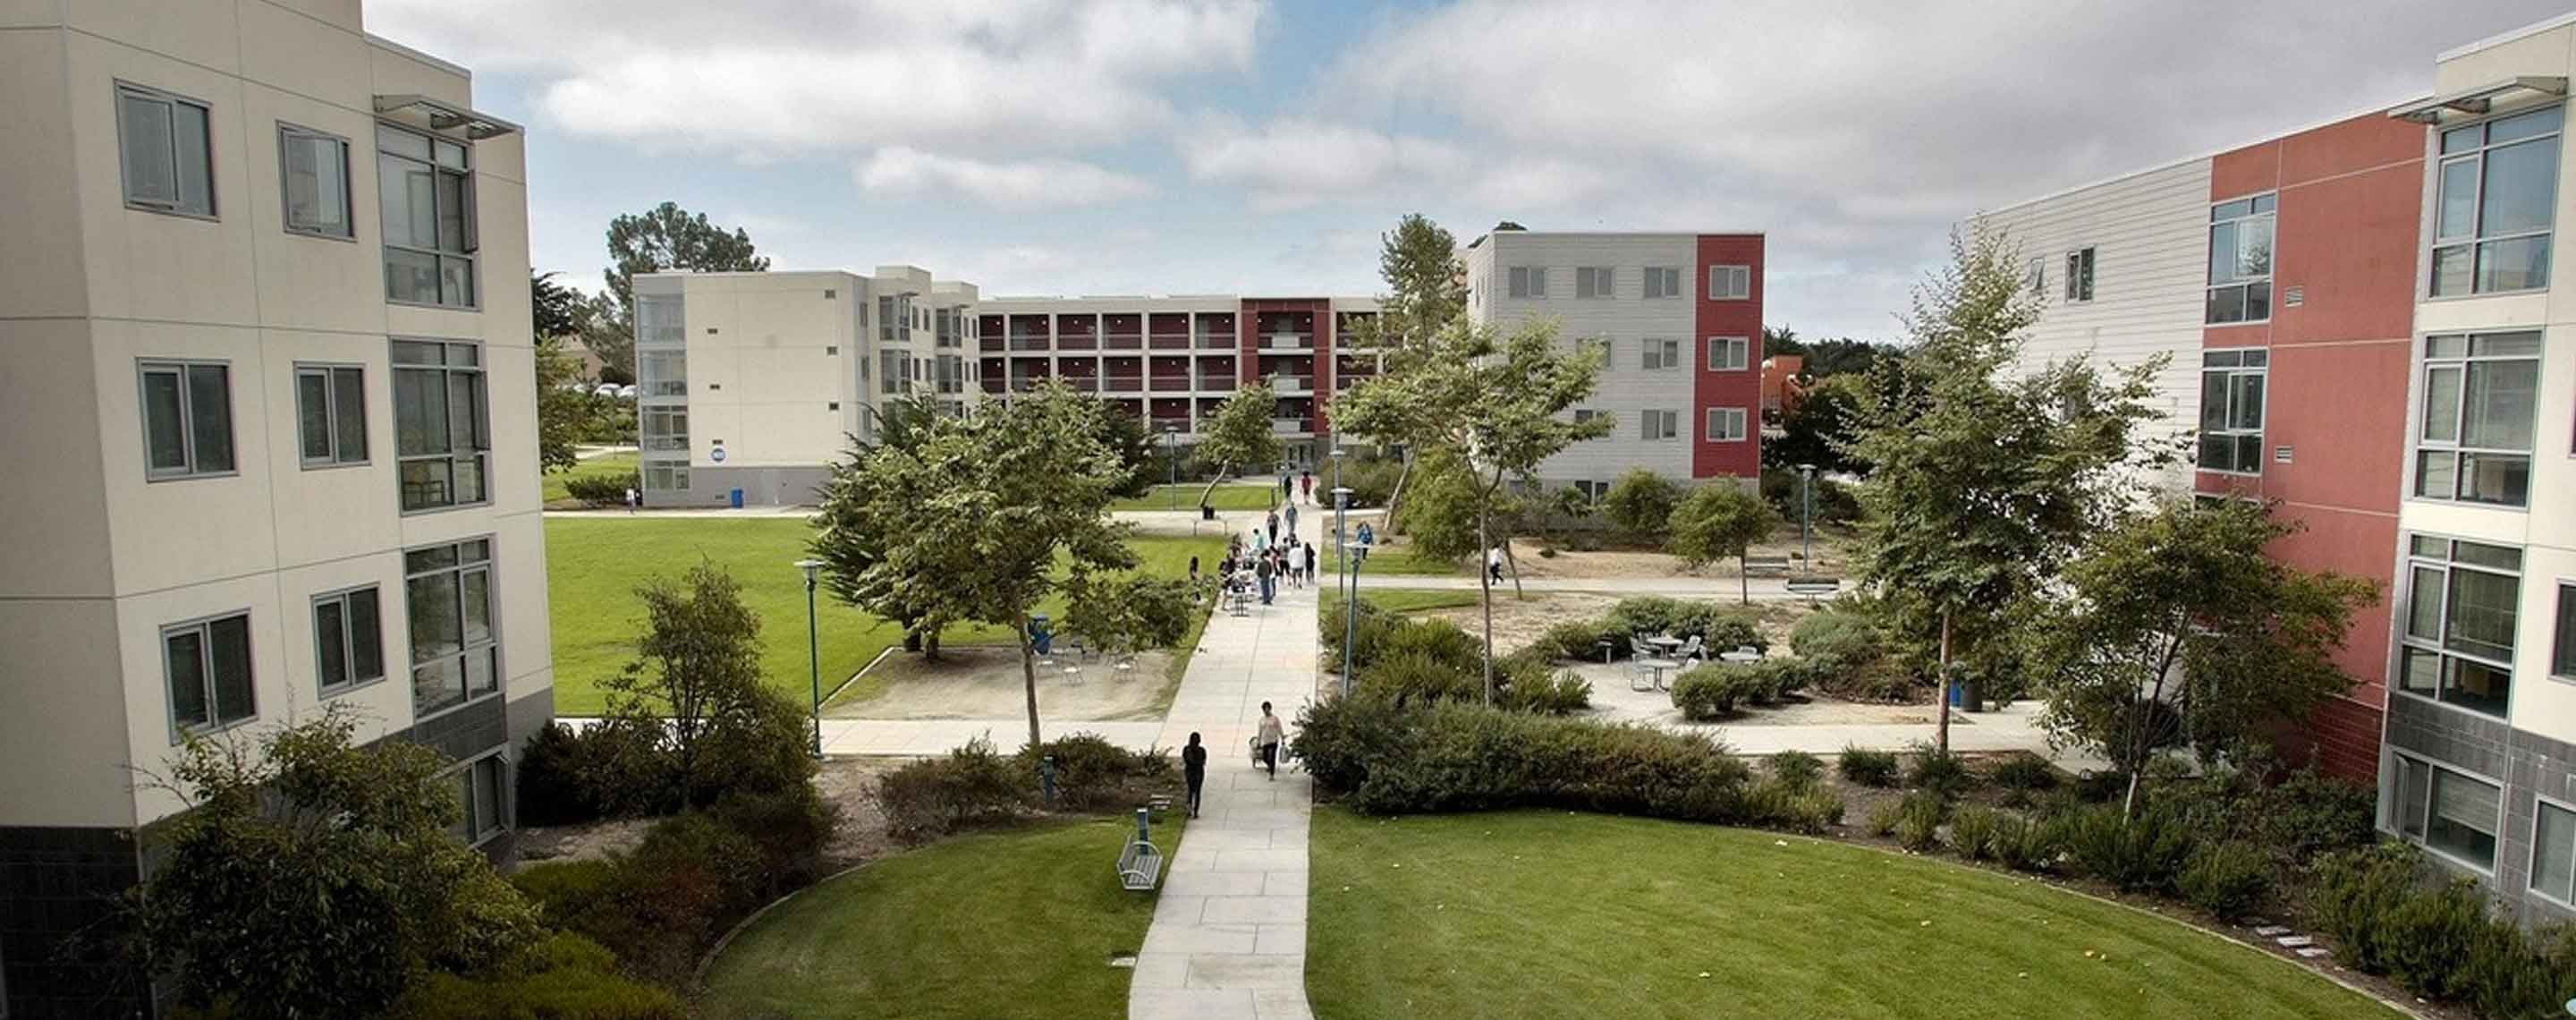 california state university